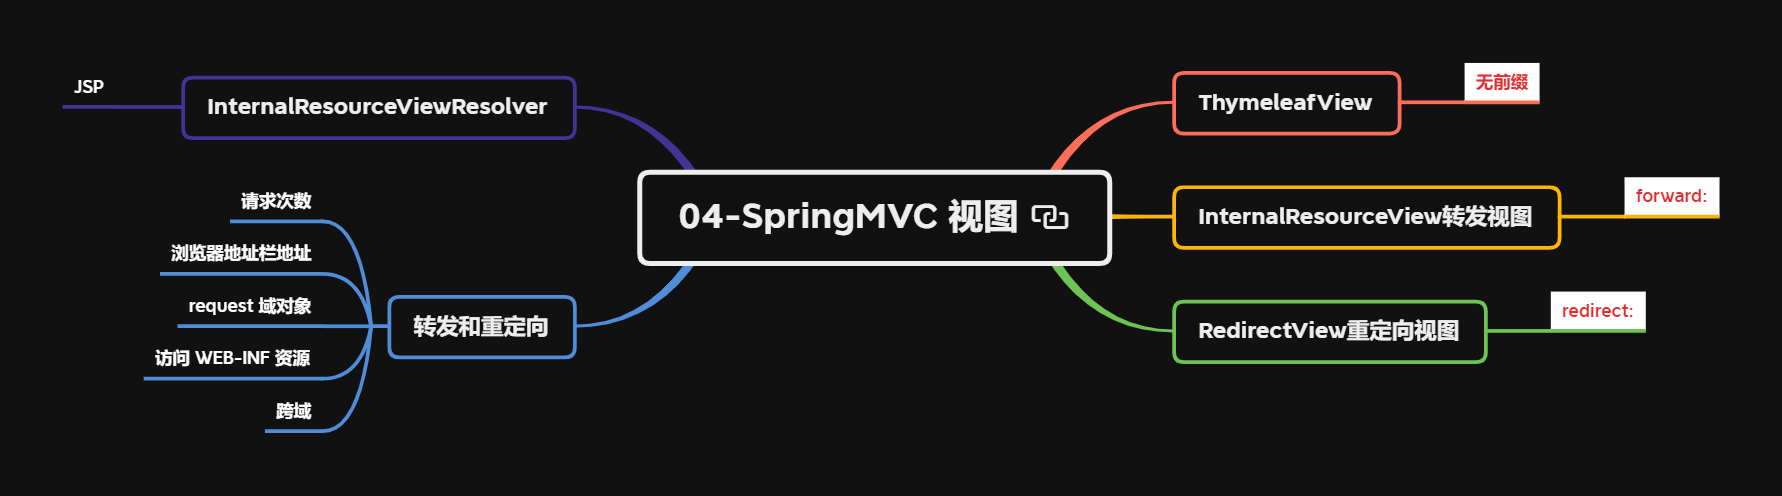 04-SpringMVC 视图